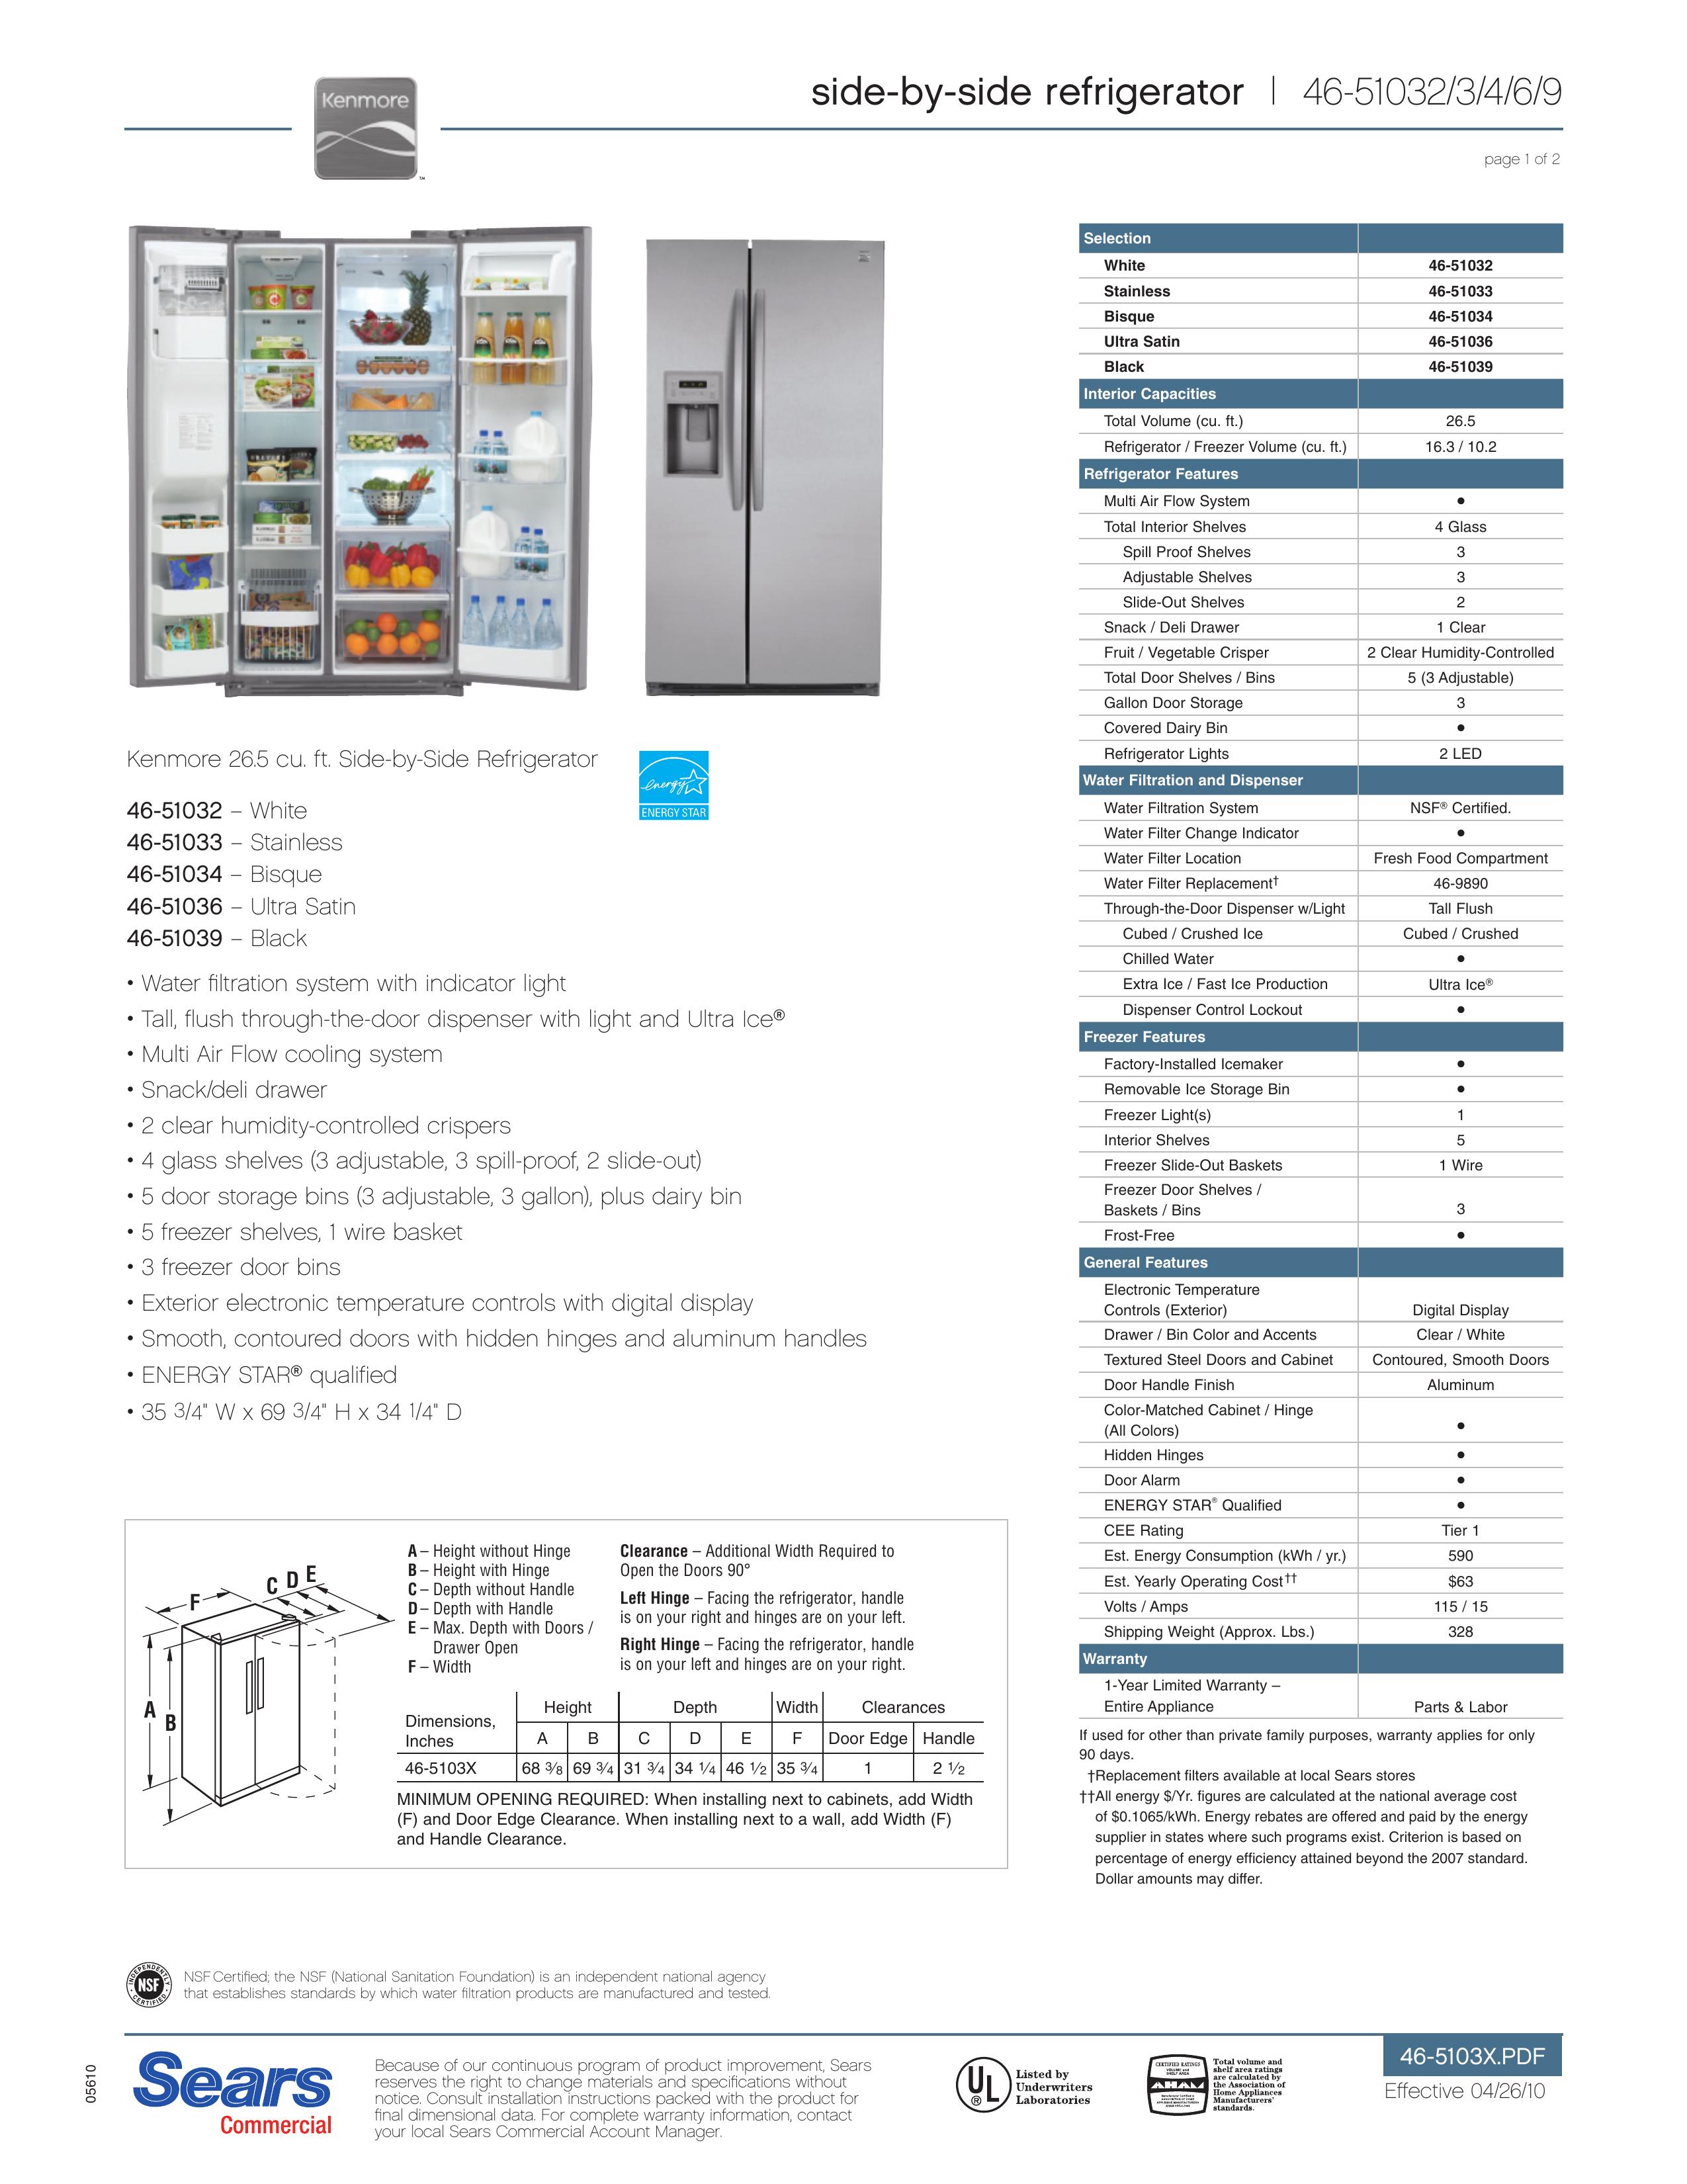 Sears 46-51036 Refrigerator User Manual